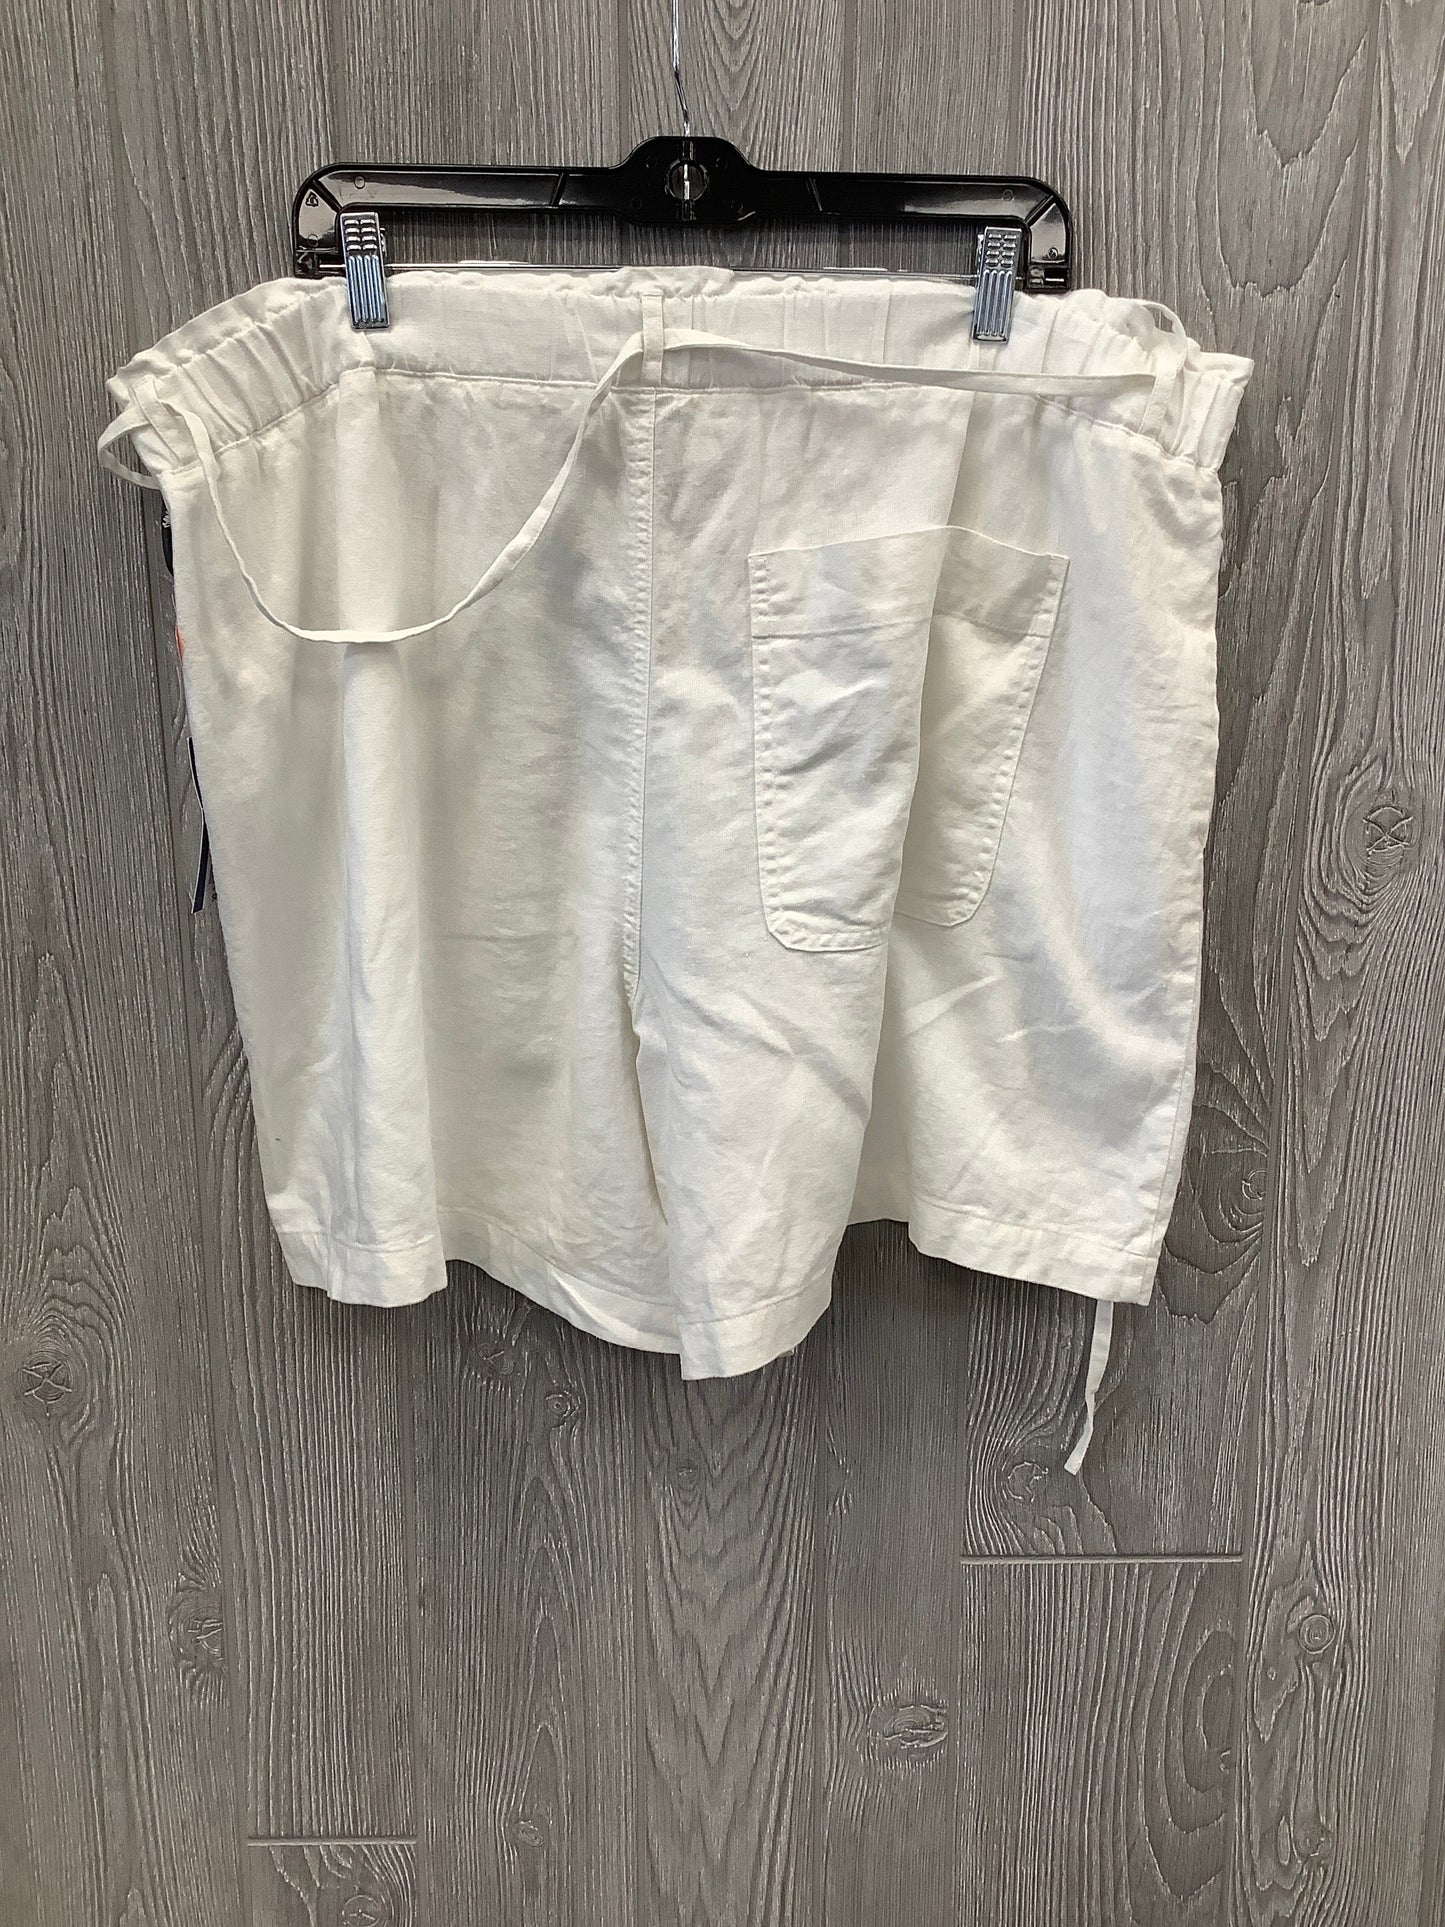 Shorts By Universal Thread  Size: Xxl